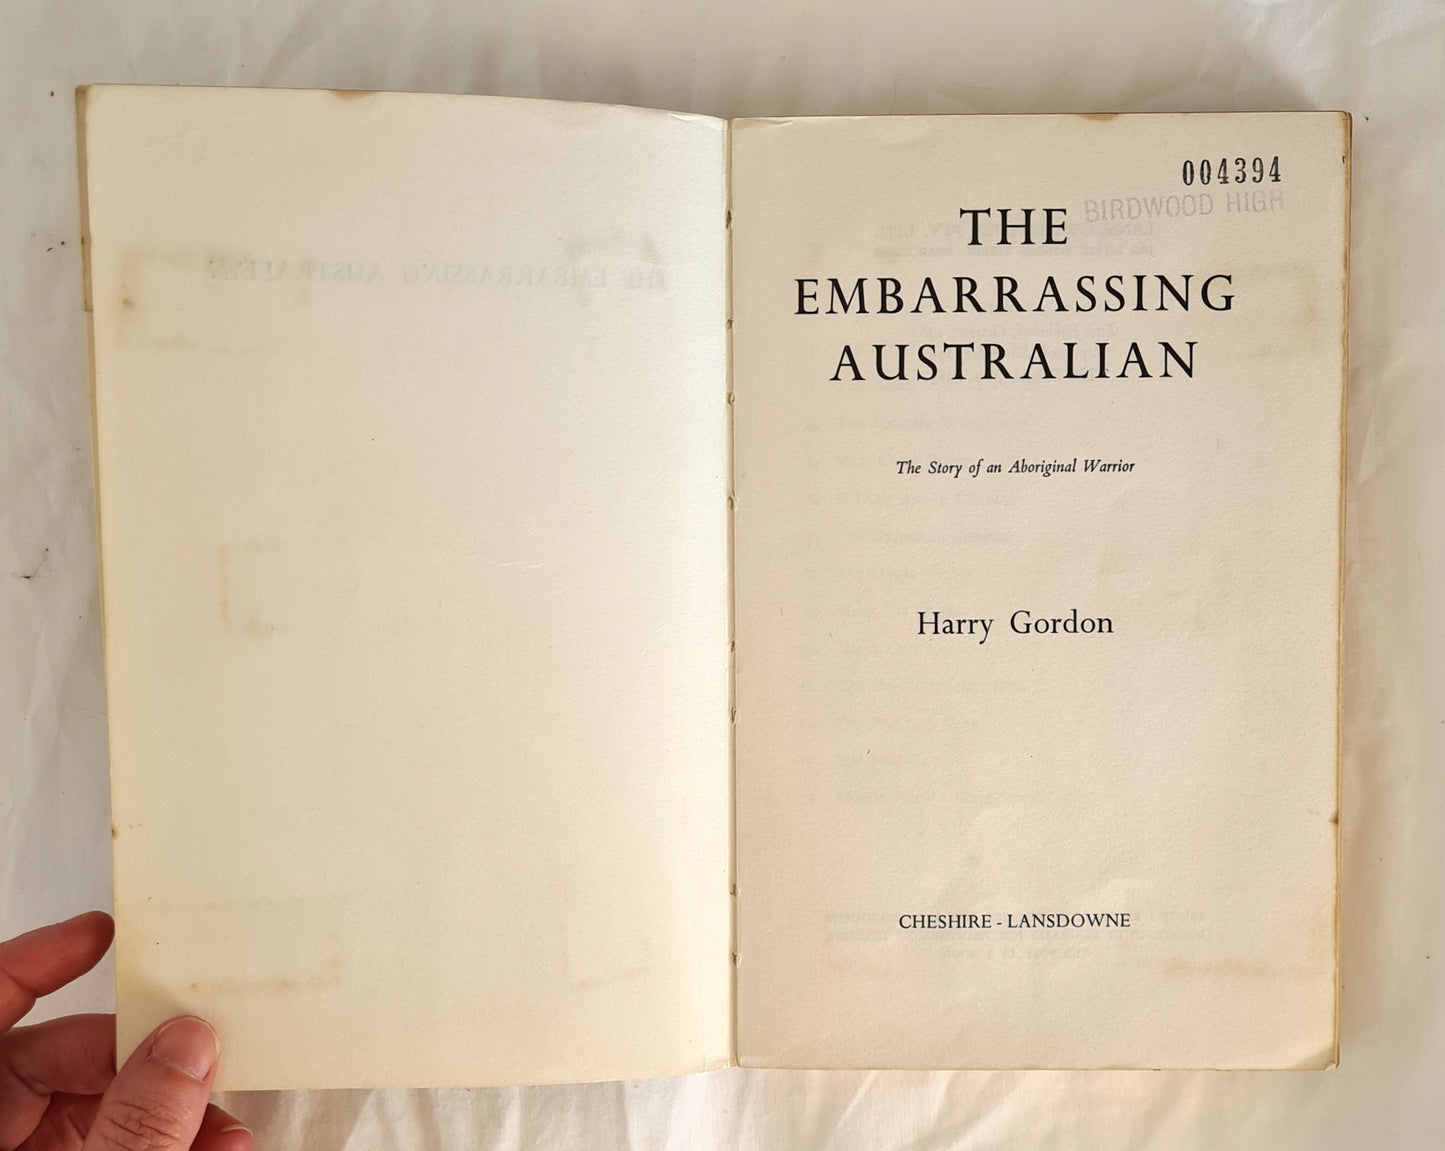 The Embarrassing Australian by Harry Gordon